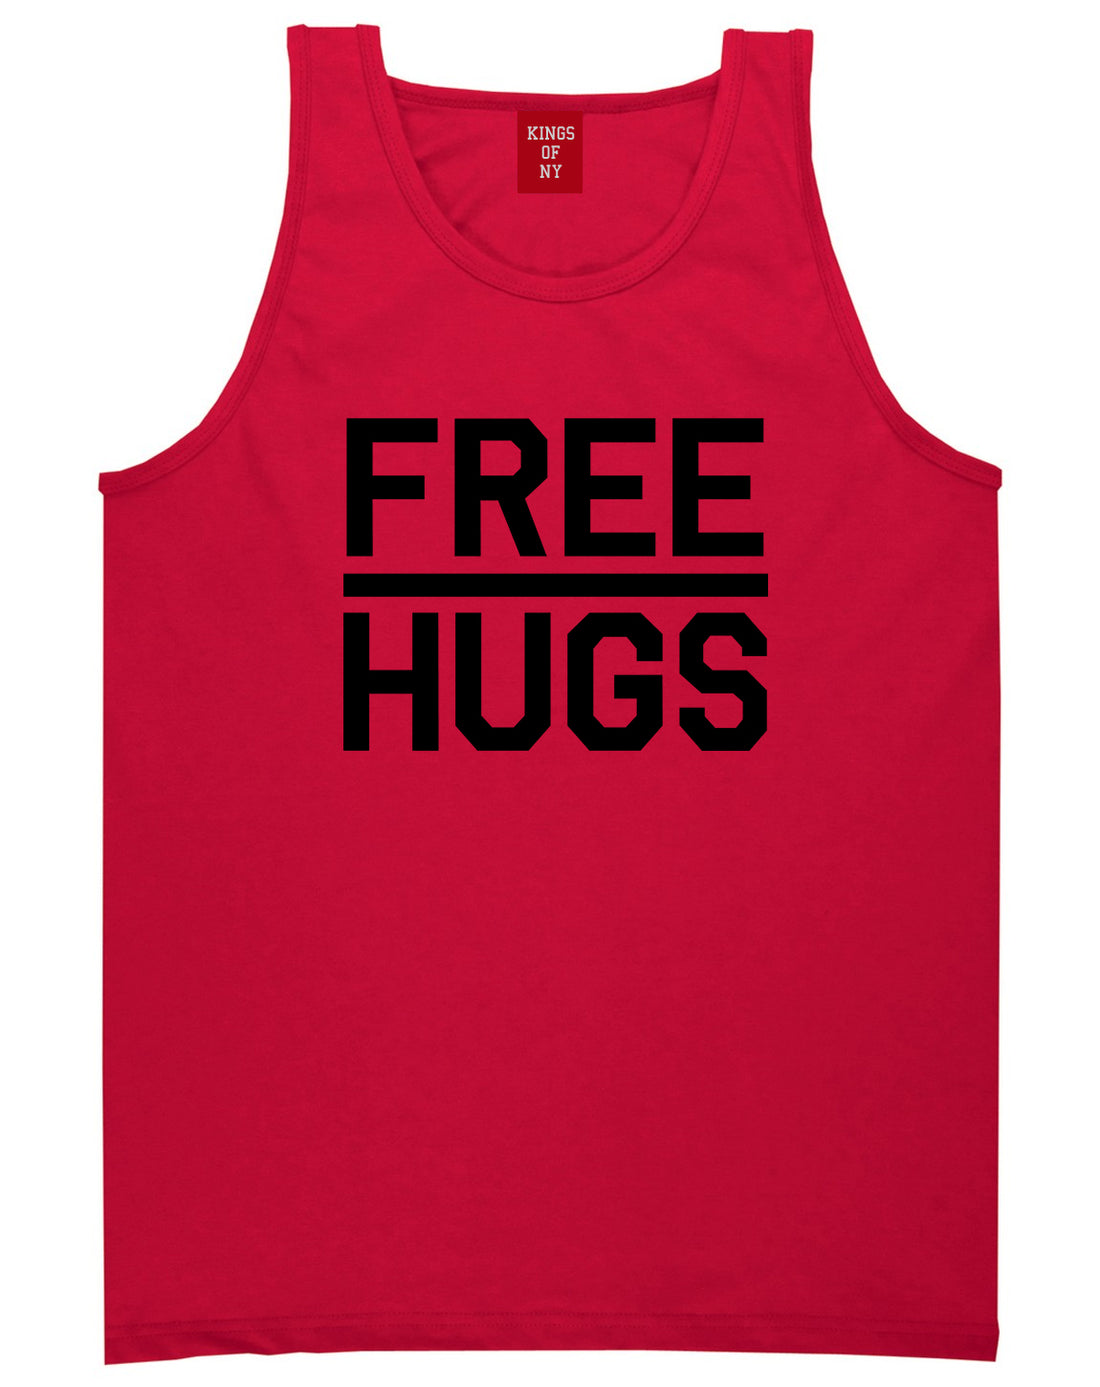 Free Hugs Funny Mens Red Tank Top Shirt by KINGS OF NY